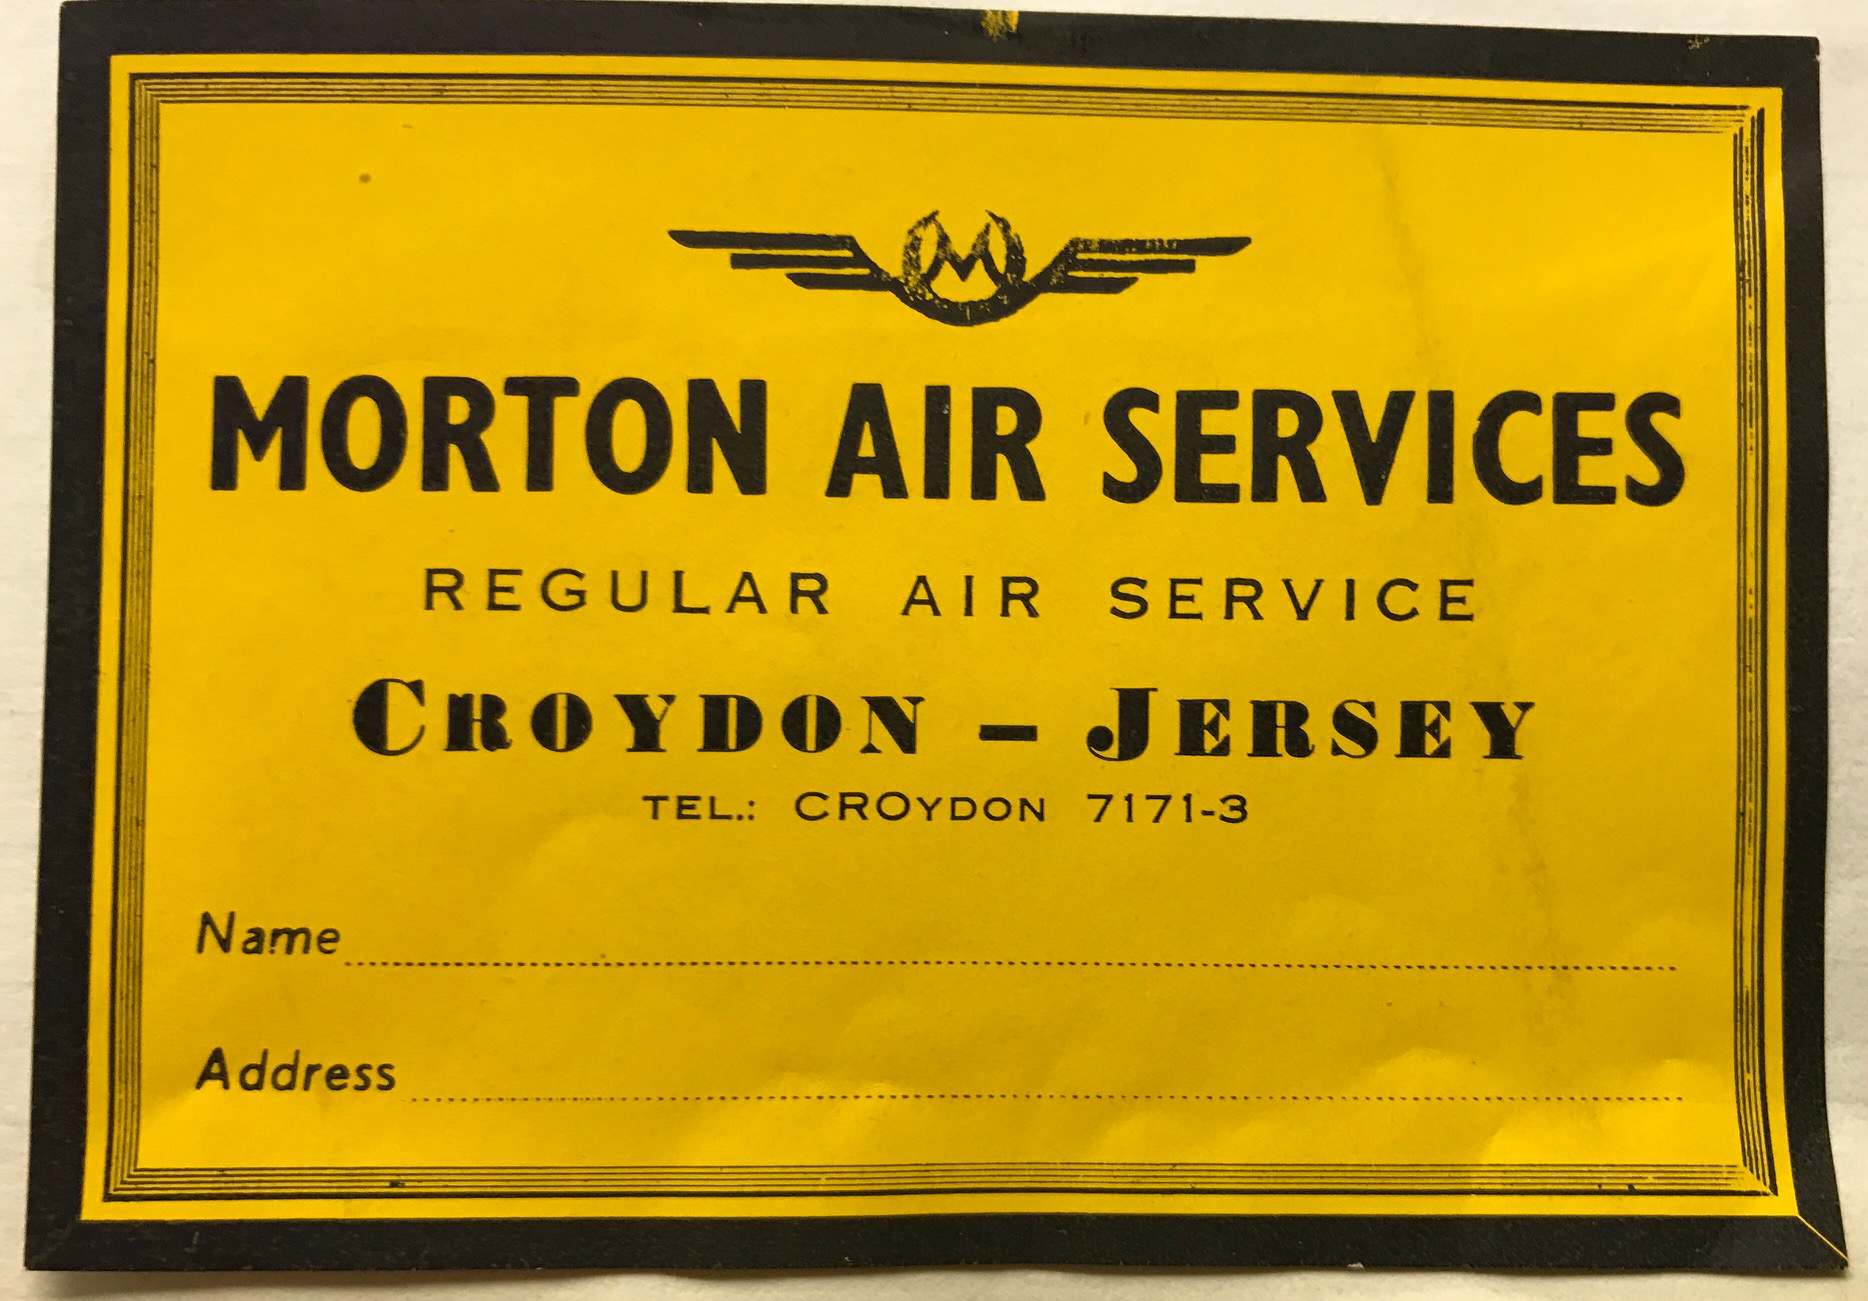 Croydon Airport: Morton Air Services.